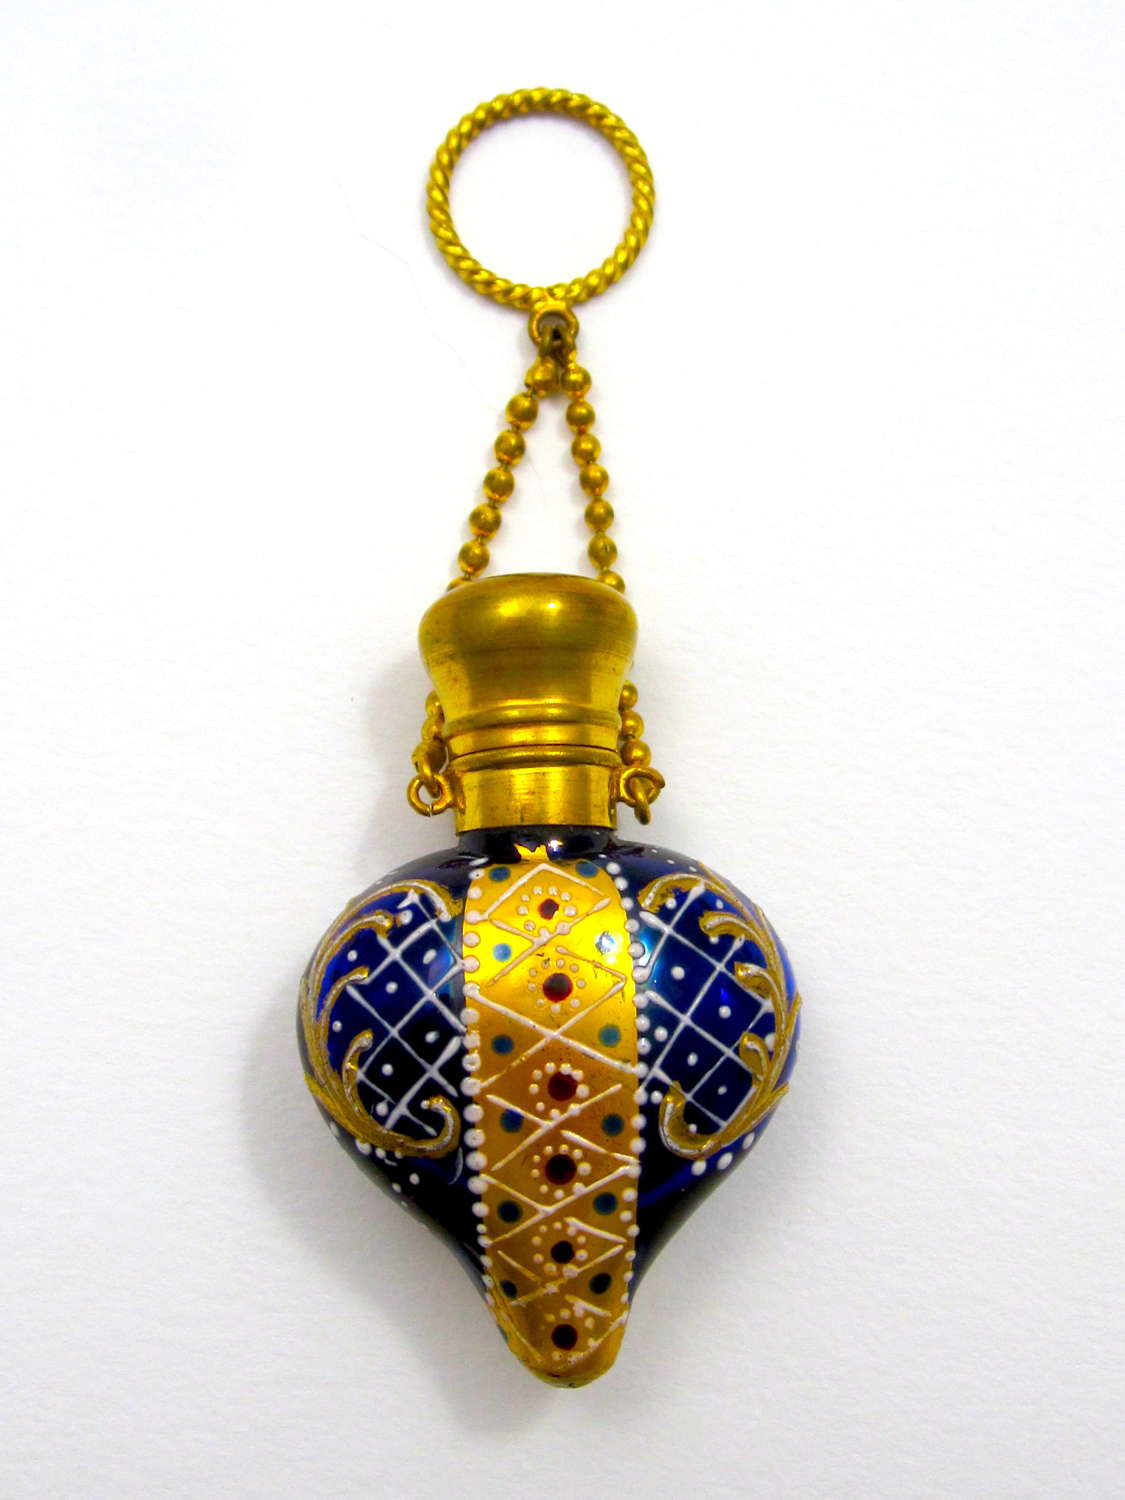 Rare Antique Moser Heart Shaped Perfume Bottle